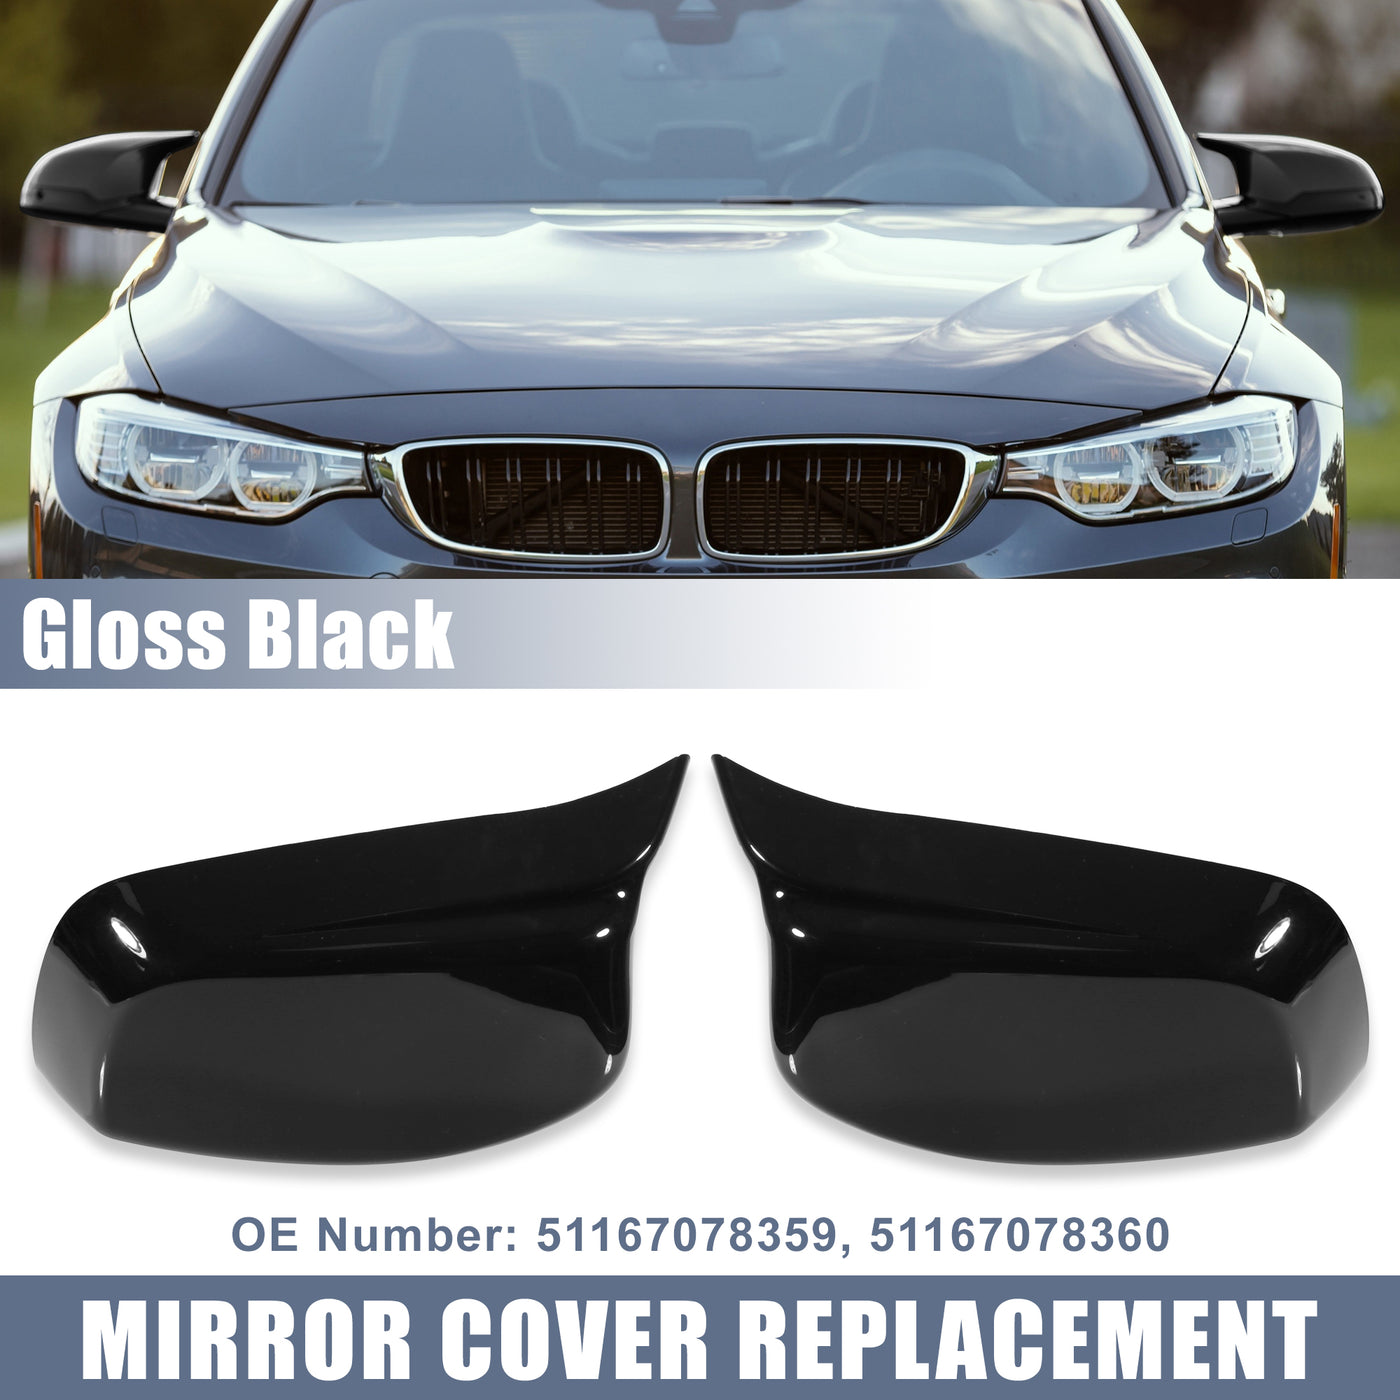 X AUTOHAUX Pair Car Exterior Rear View Mirror Covers Cap Replacement for BMW 5 Series E60 E61 E63 E64 2004-2007 Gloss Black